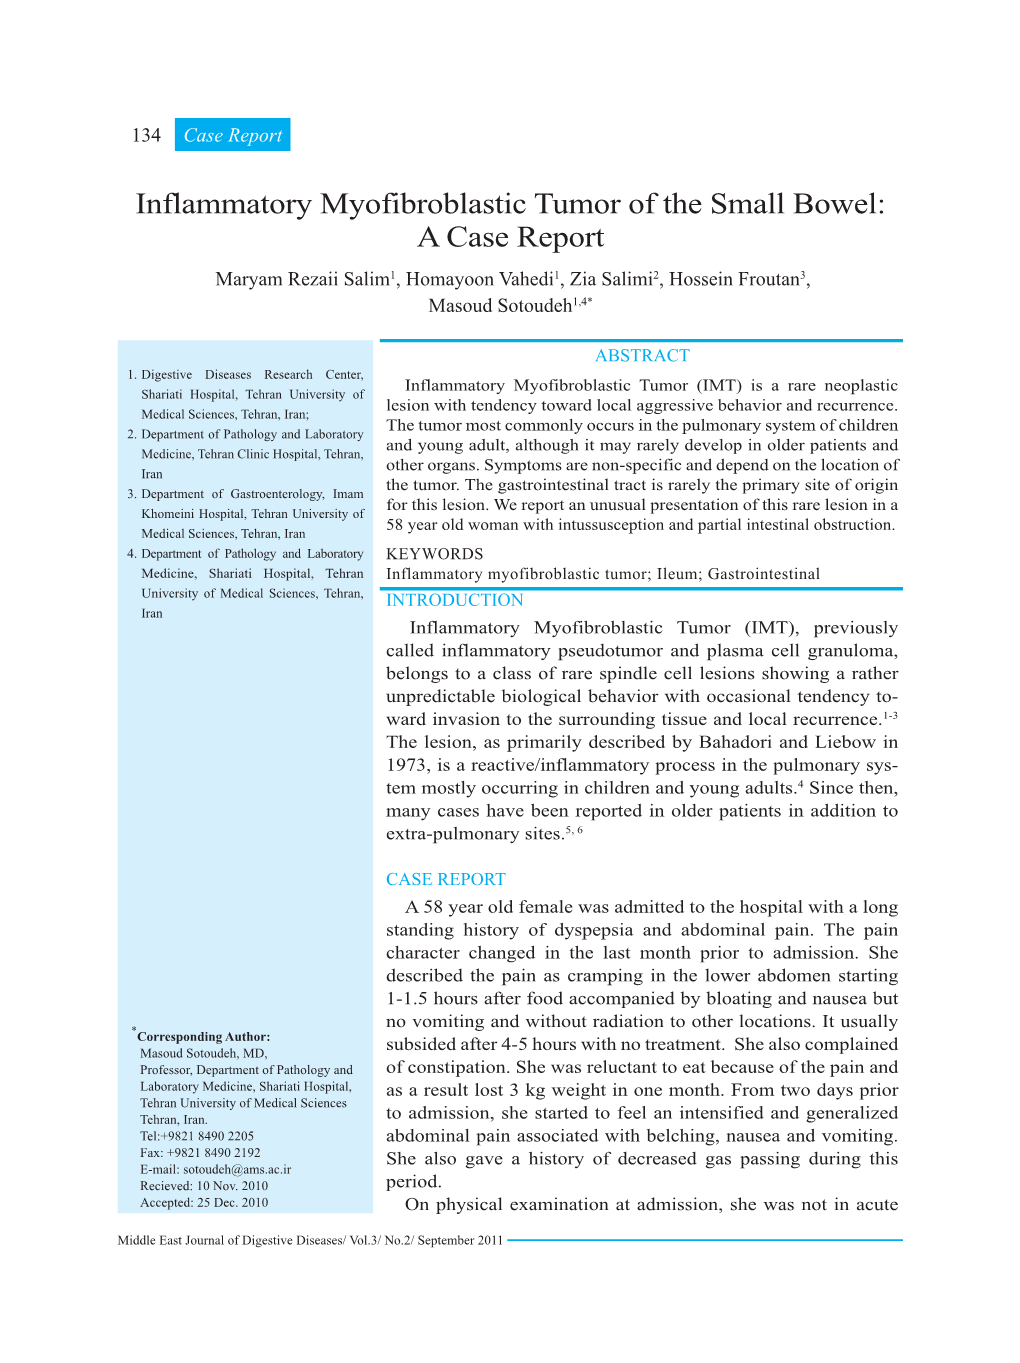 Inflammatory Myofibroblastic Tumor of the Small Bowel: a Case Report Maryam Rezaii Salim1, Homayoon Vahedi1, Zia Salimi2, Hossein Froutan3, Masoud Sotoudeh1,4*